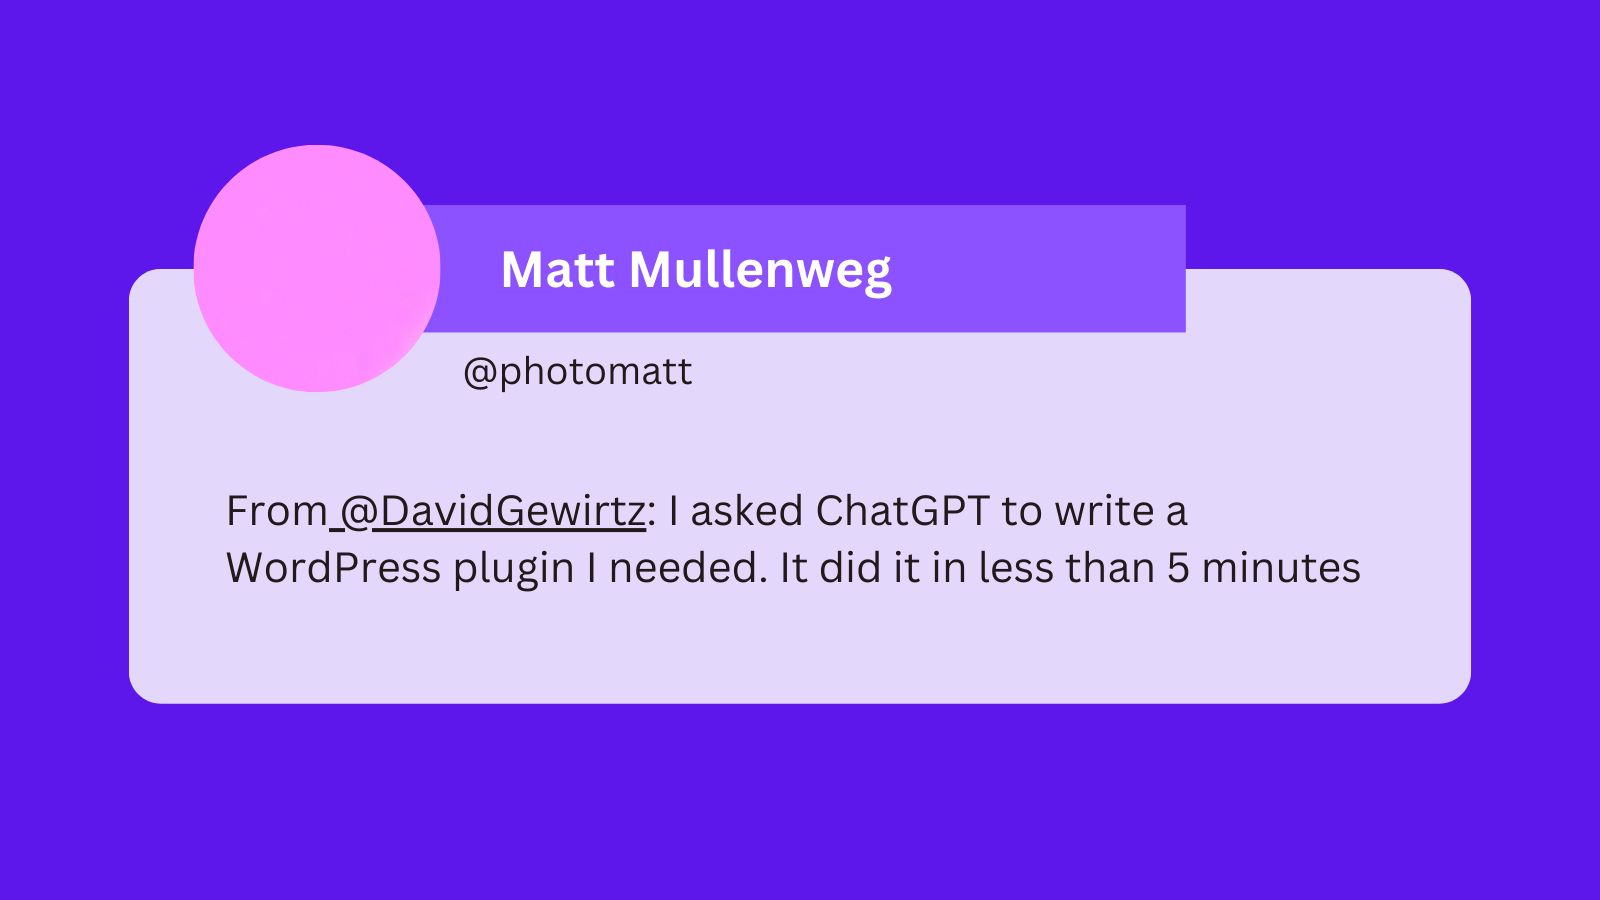 A tweet from Matt Mullenweg that reads: From @DavidGewirtz: I asked ChatGPT to write a WordPress plugin I needed. It did it in less than 5 minutes